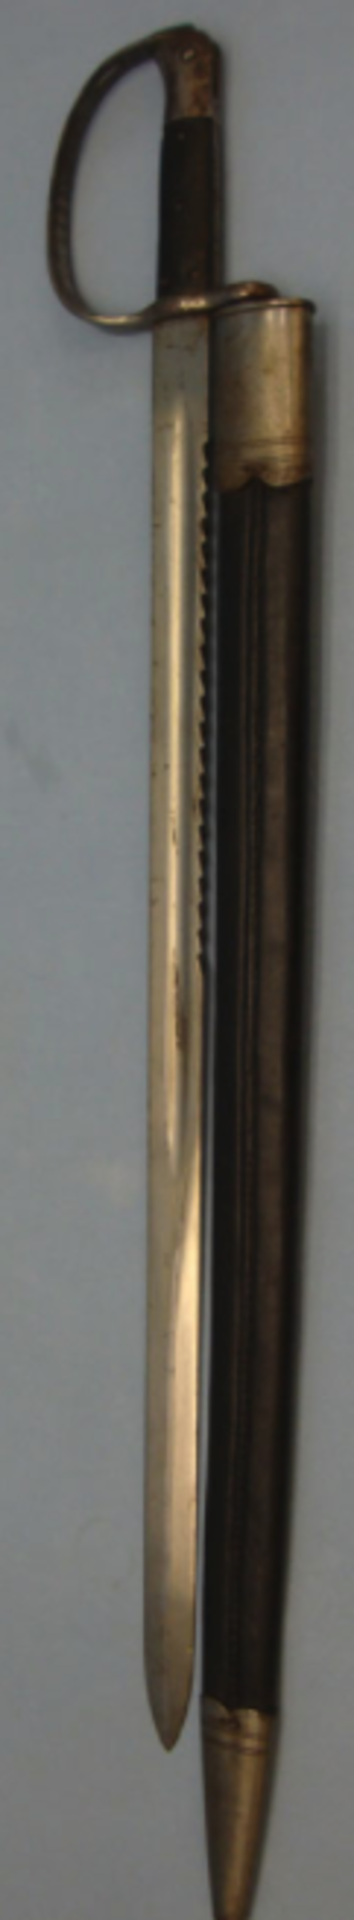 British 1879 Artillery Sawback Bayonet and Scabbard - Image 2 of 3